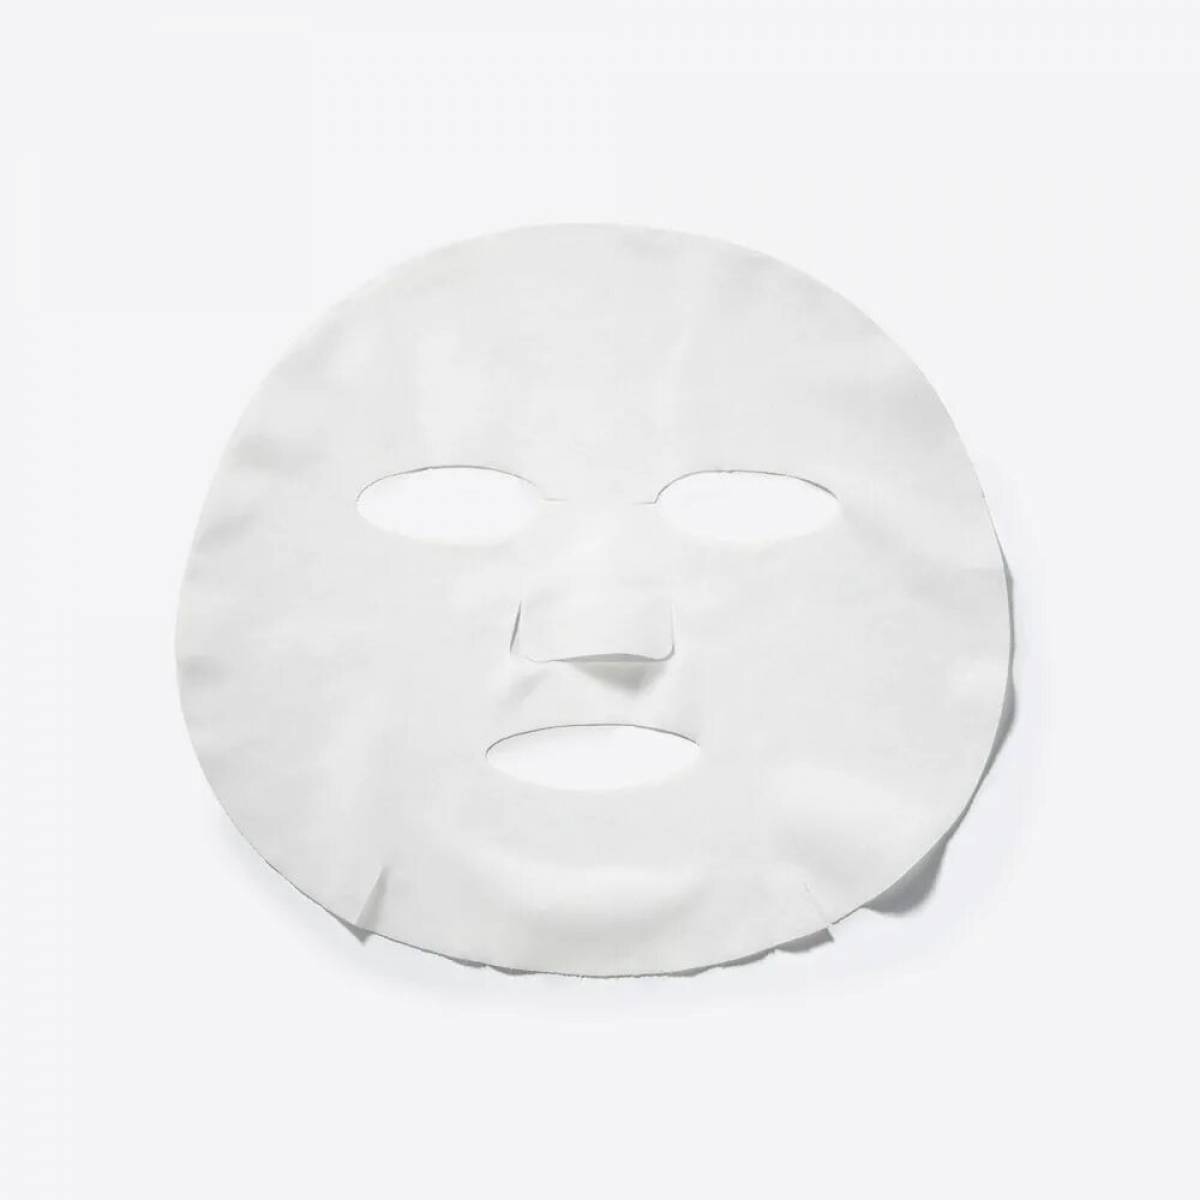 Coloring rich moisturizing face masks